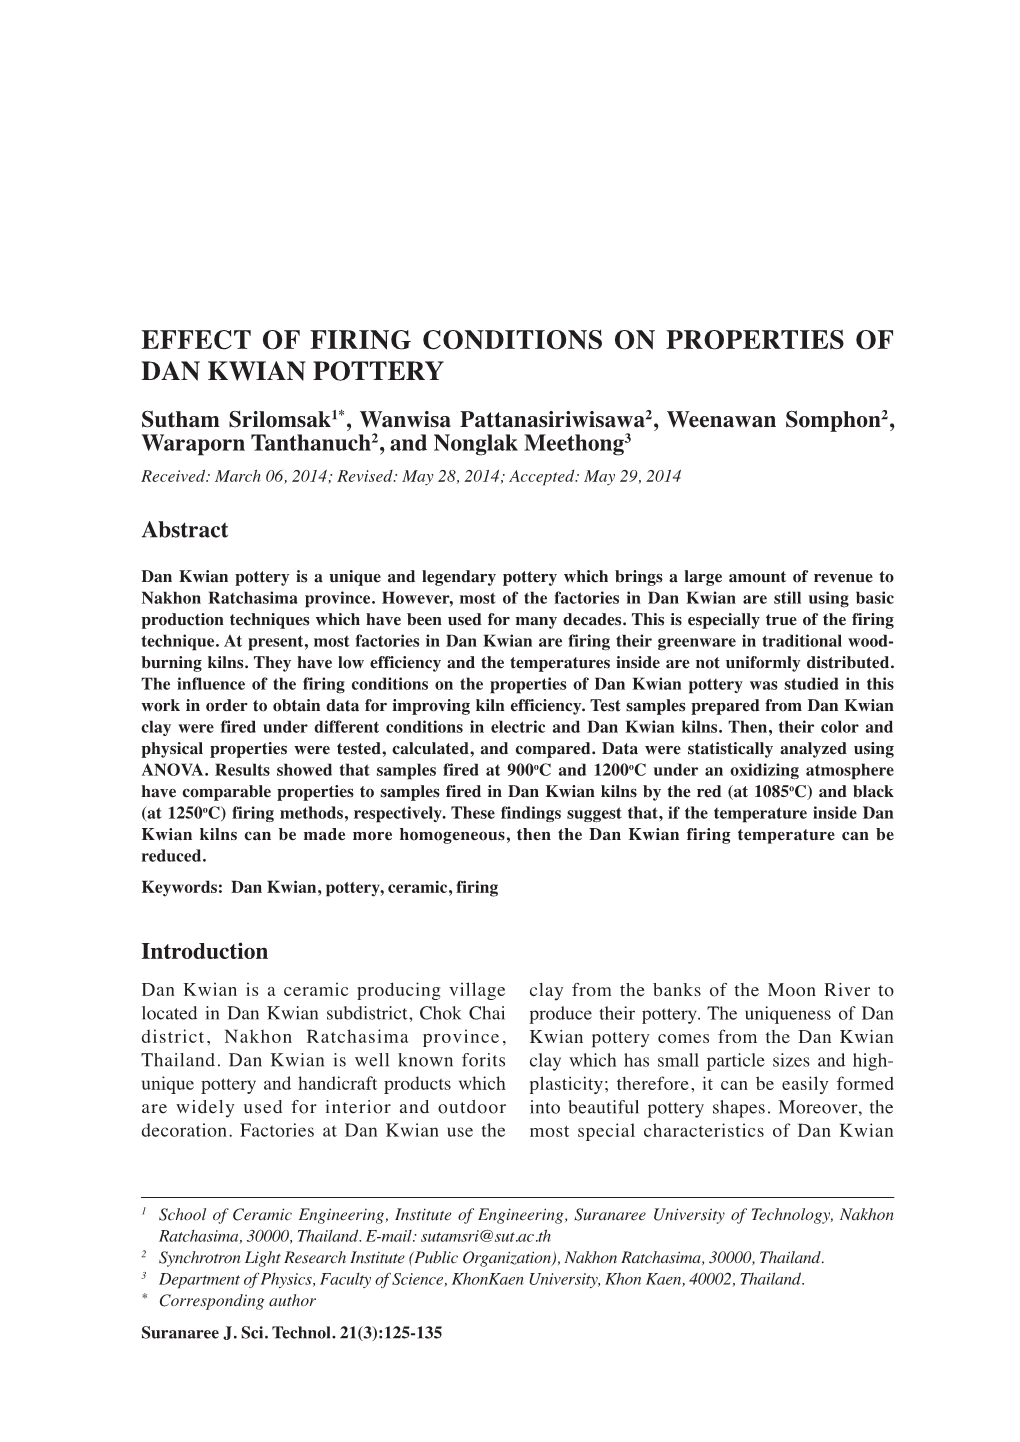 Effect of Firing Conditions on Properties of Dan Kwian Pottery